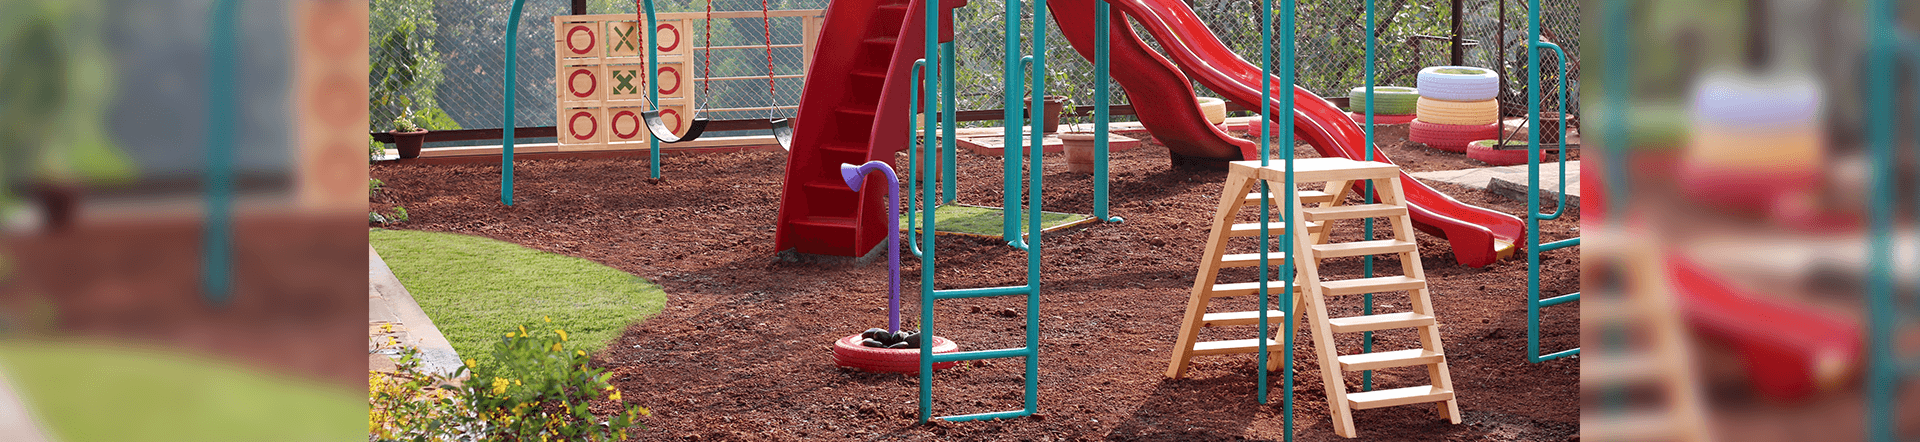 An Environmentally Responsible School Playground, Igatpuri